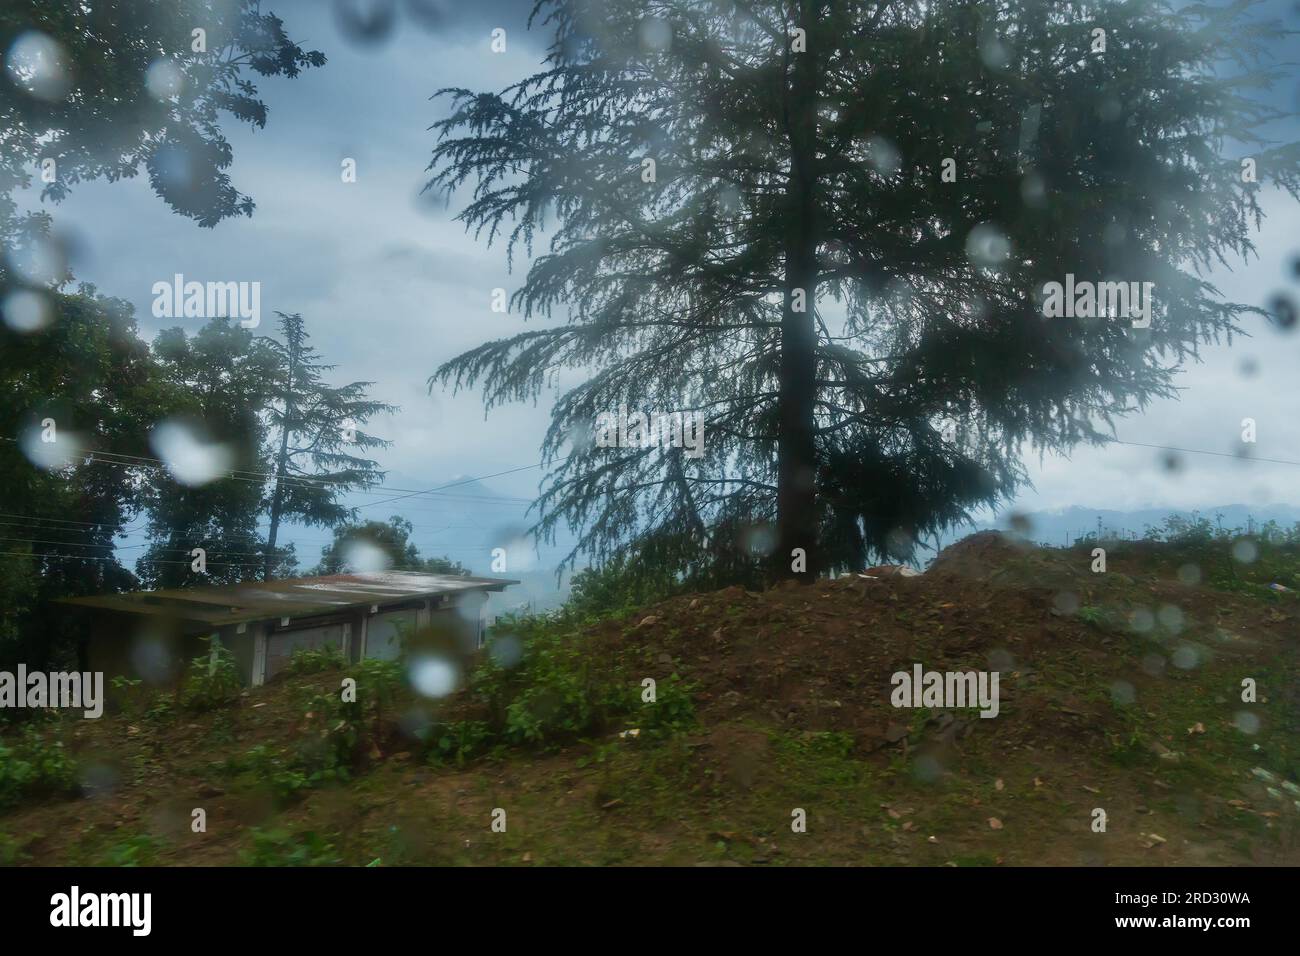 Abstract monsoon landscape of Himalays, Garhwal, Uttarakhand, India. Climate change effect on Himalays bringing landslide, untimely rain etc. Stock Photo